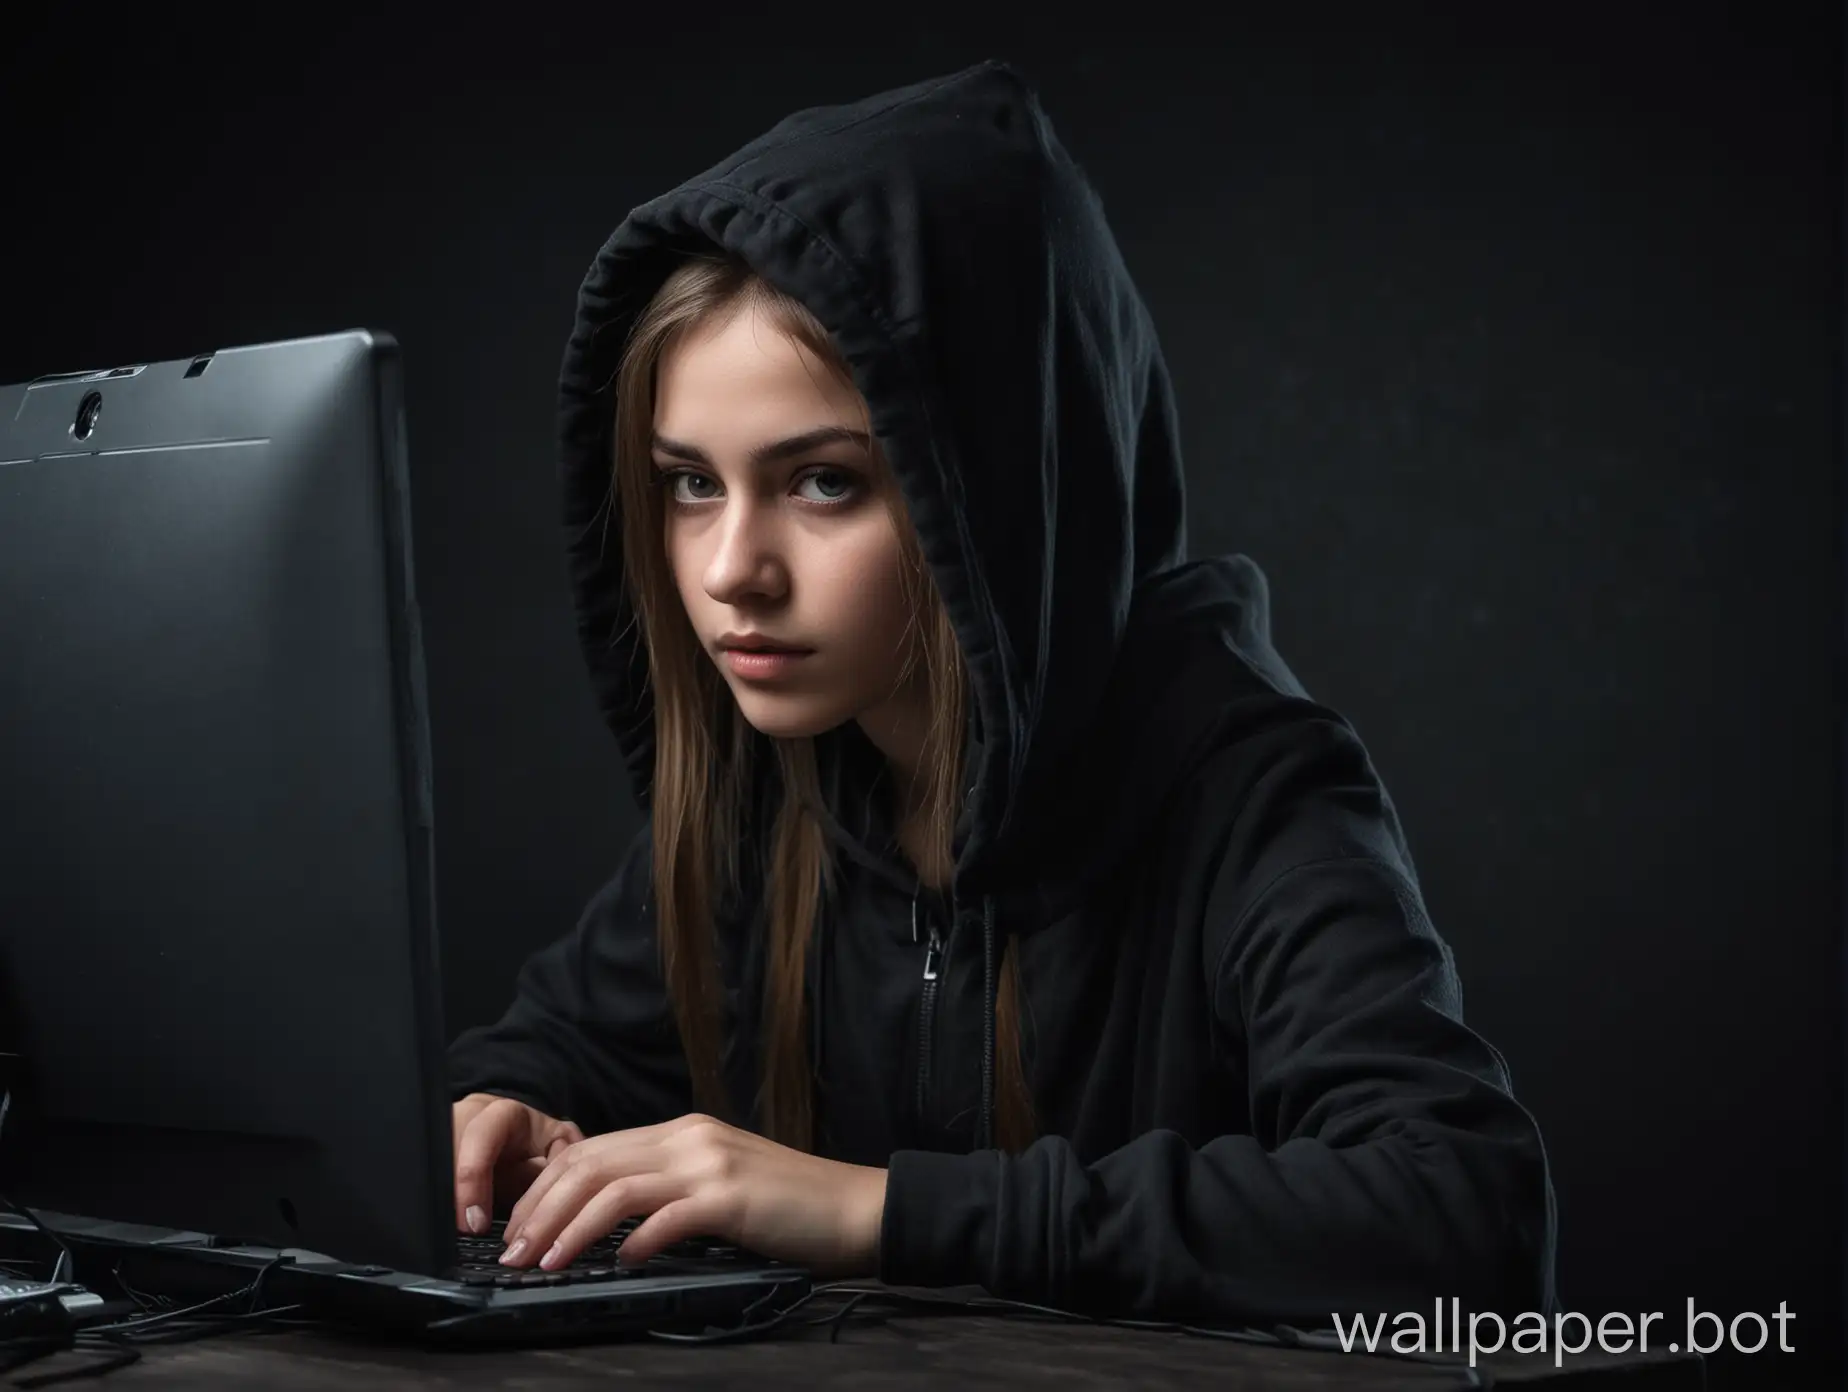 Girl-Hacker-Working-at-Computer-in-Dark-Environment